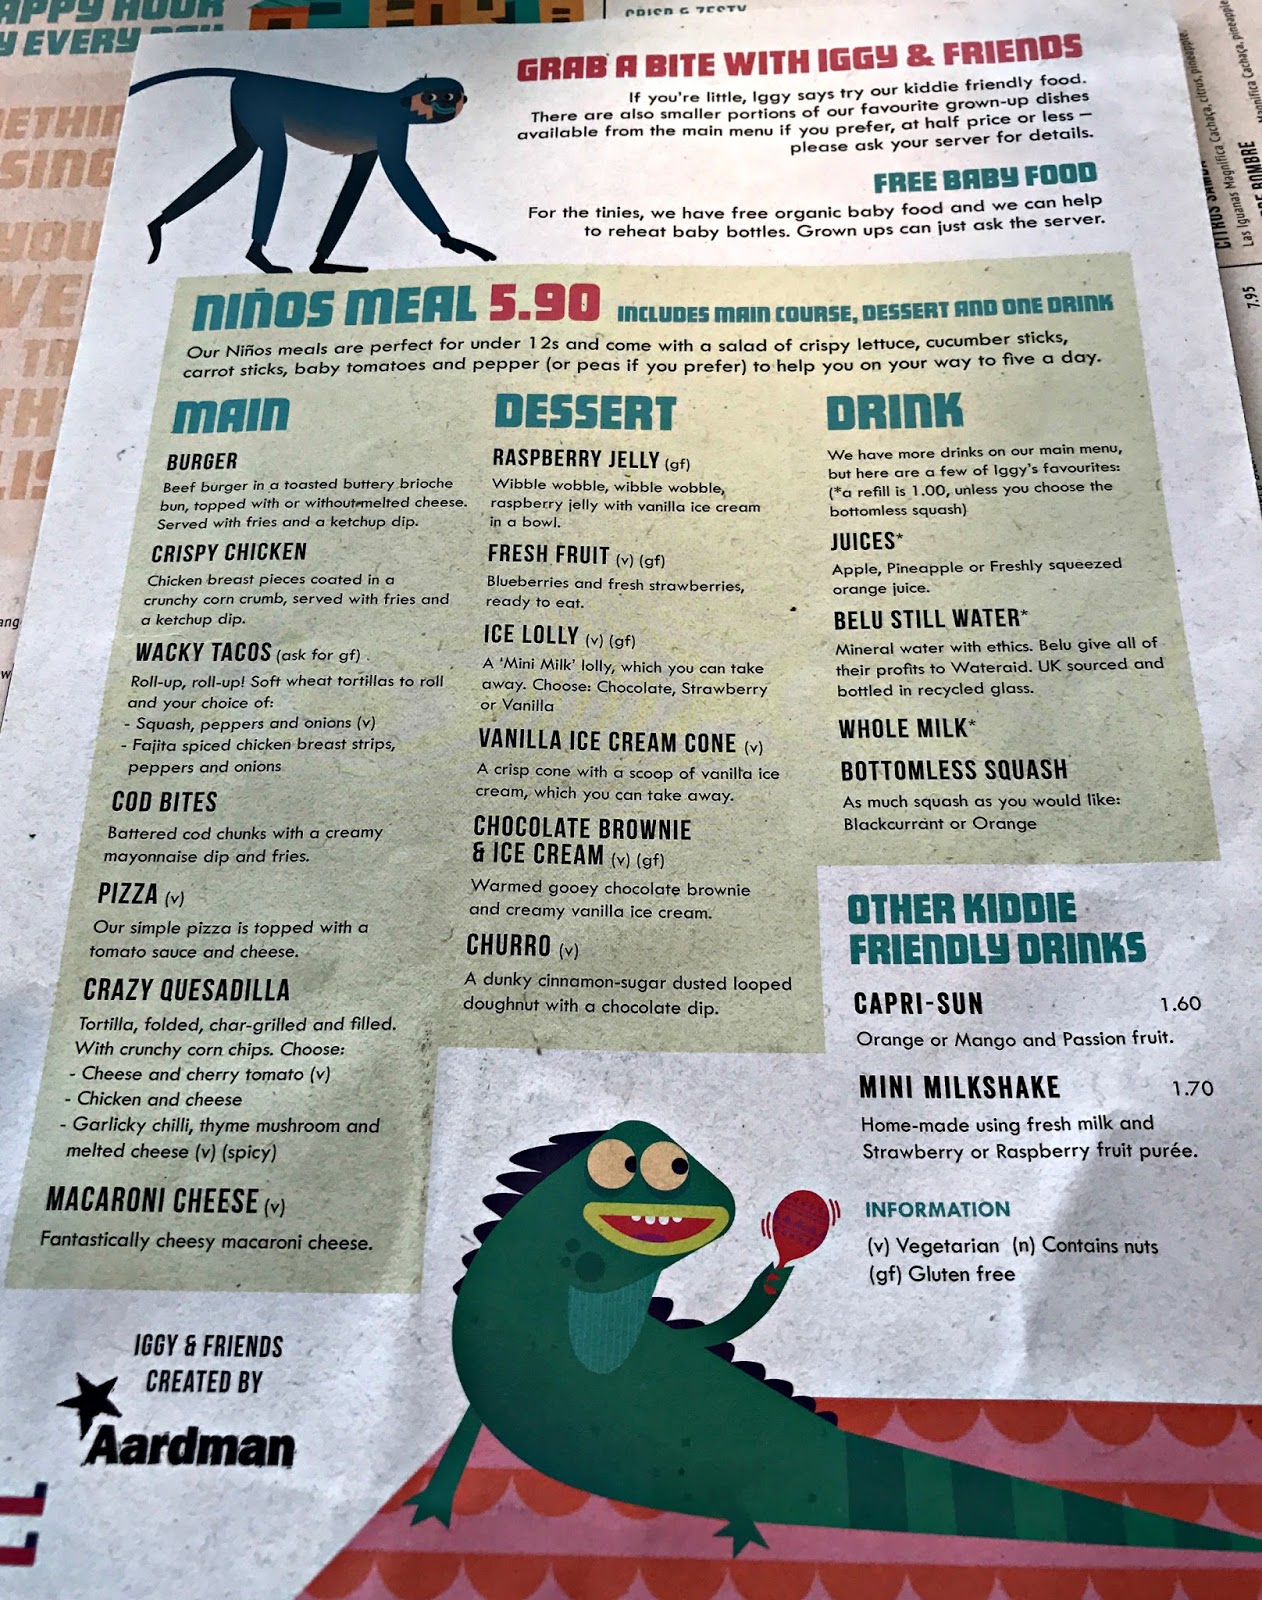 The children's menu at Las Iguanas